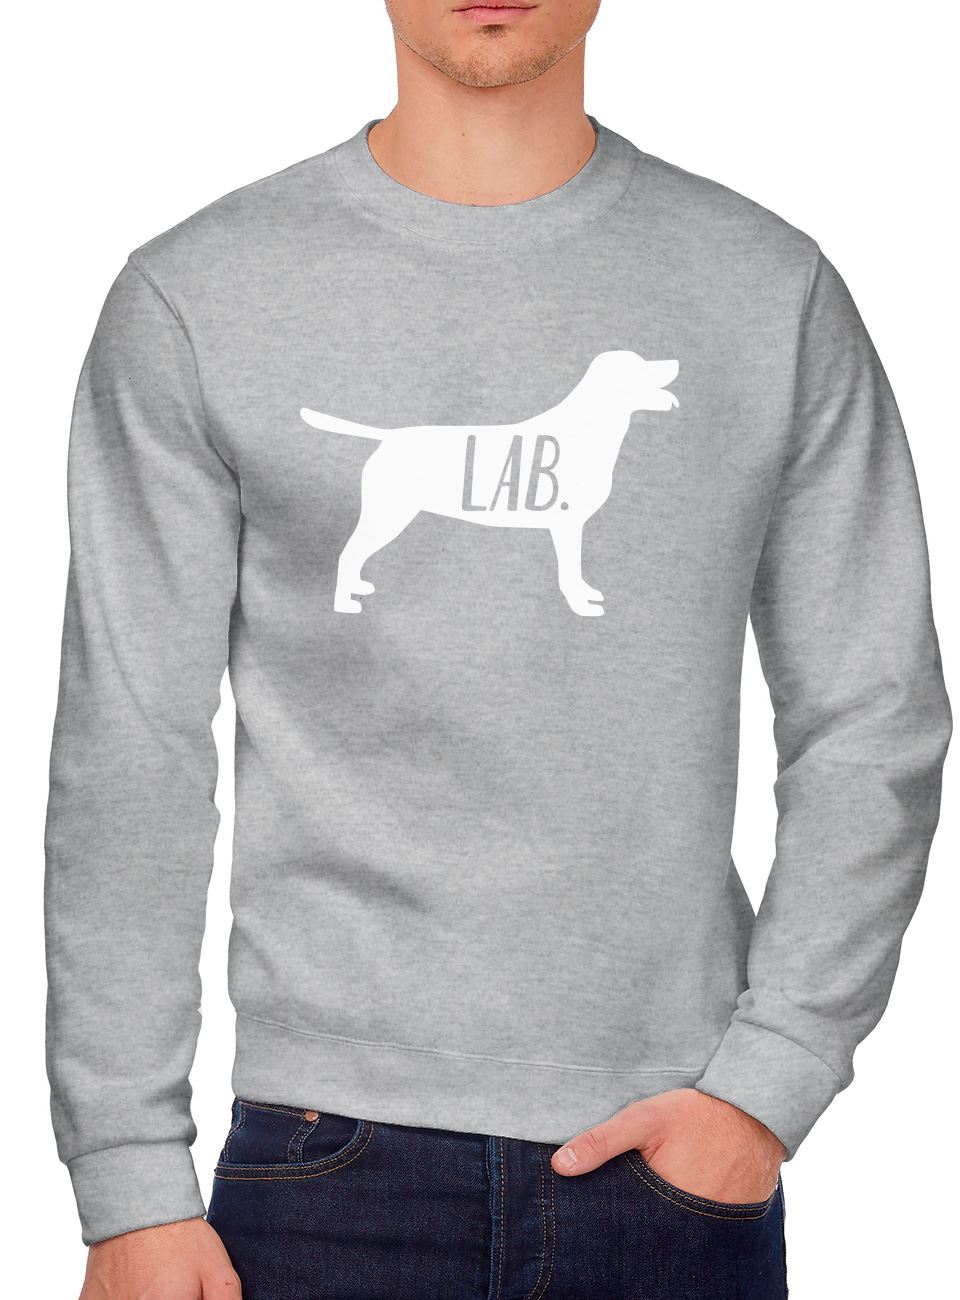 Labrador Dog - Youth & Mens Sweatshirt